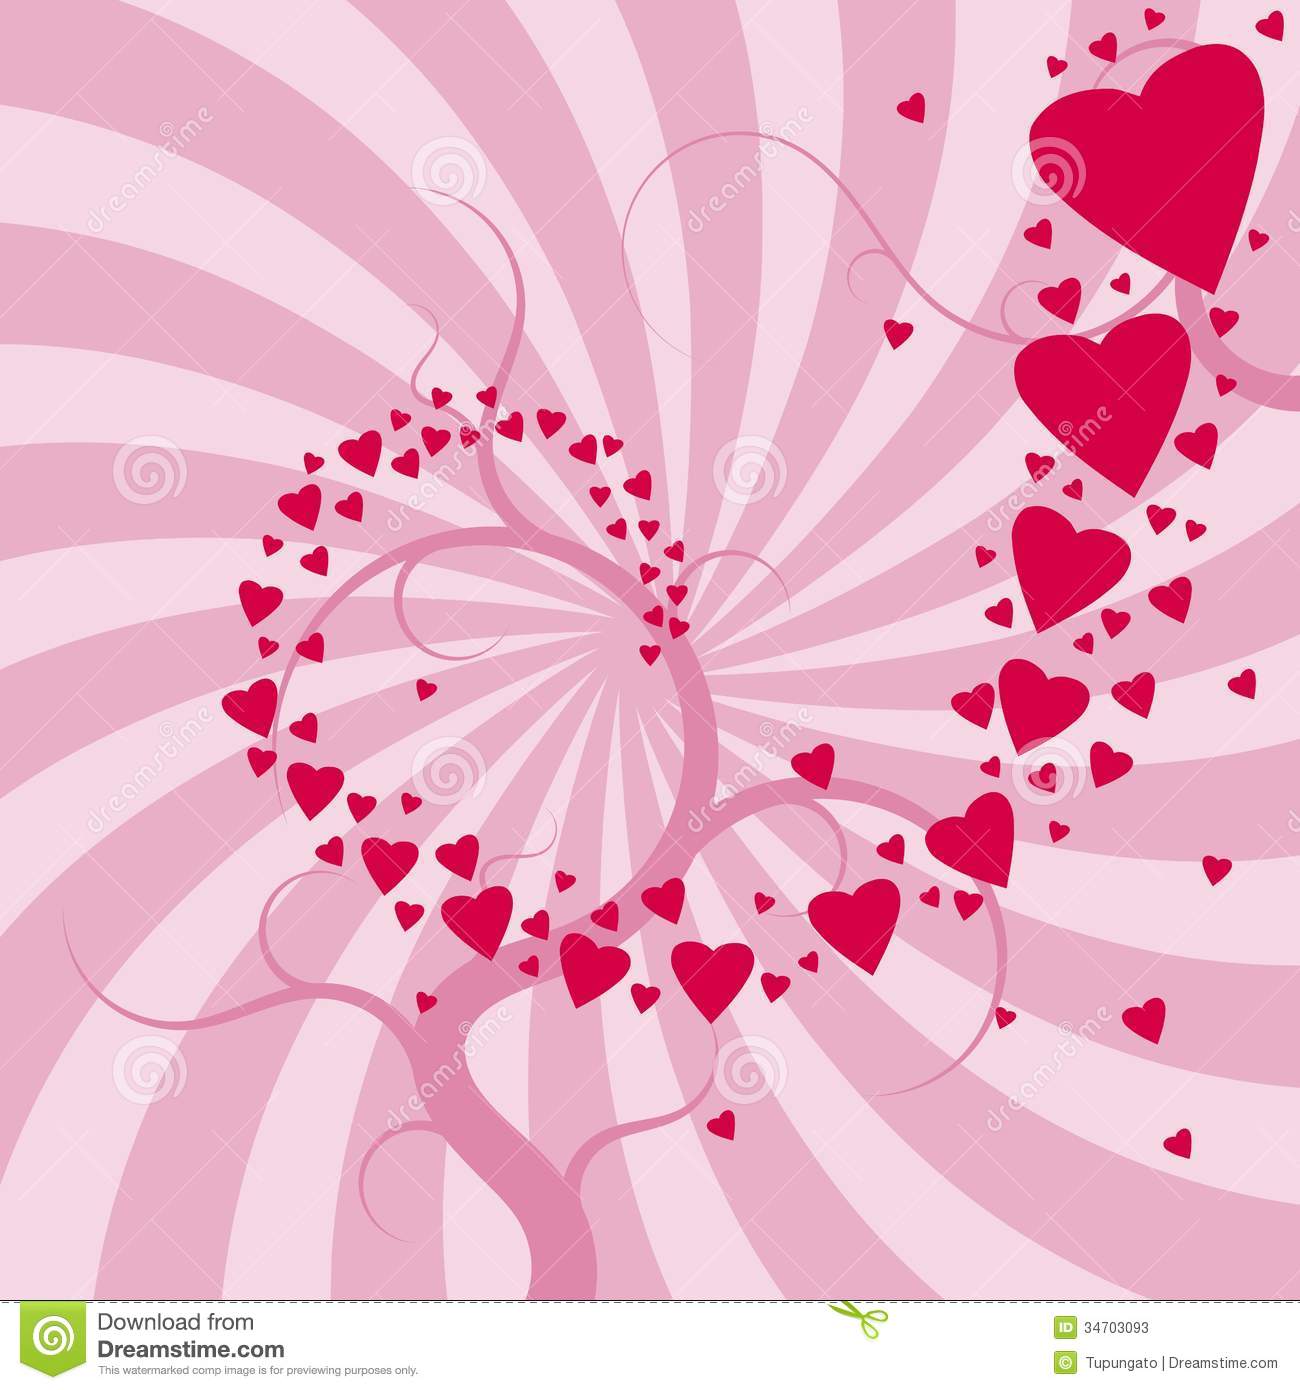 Love Background Romantic Celebration Valentine S Day Hearts Concentric